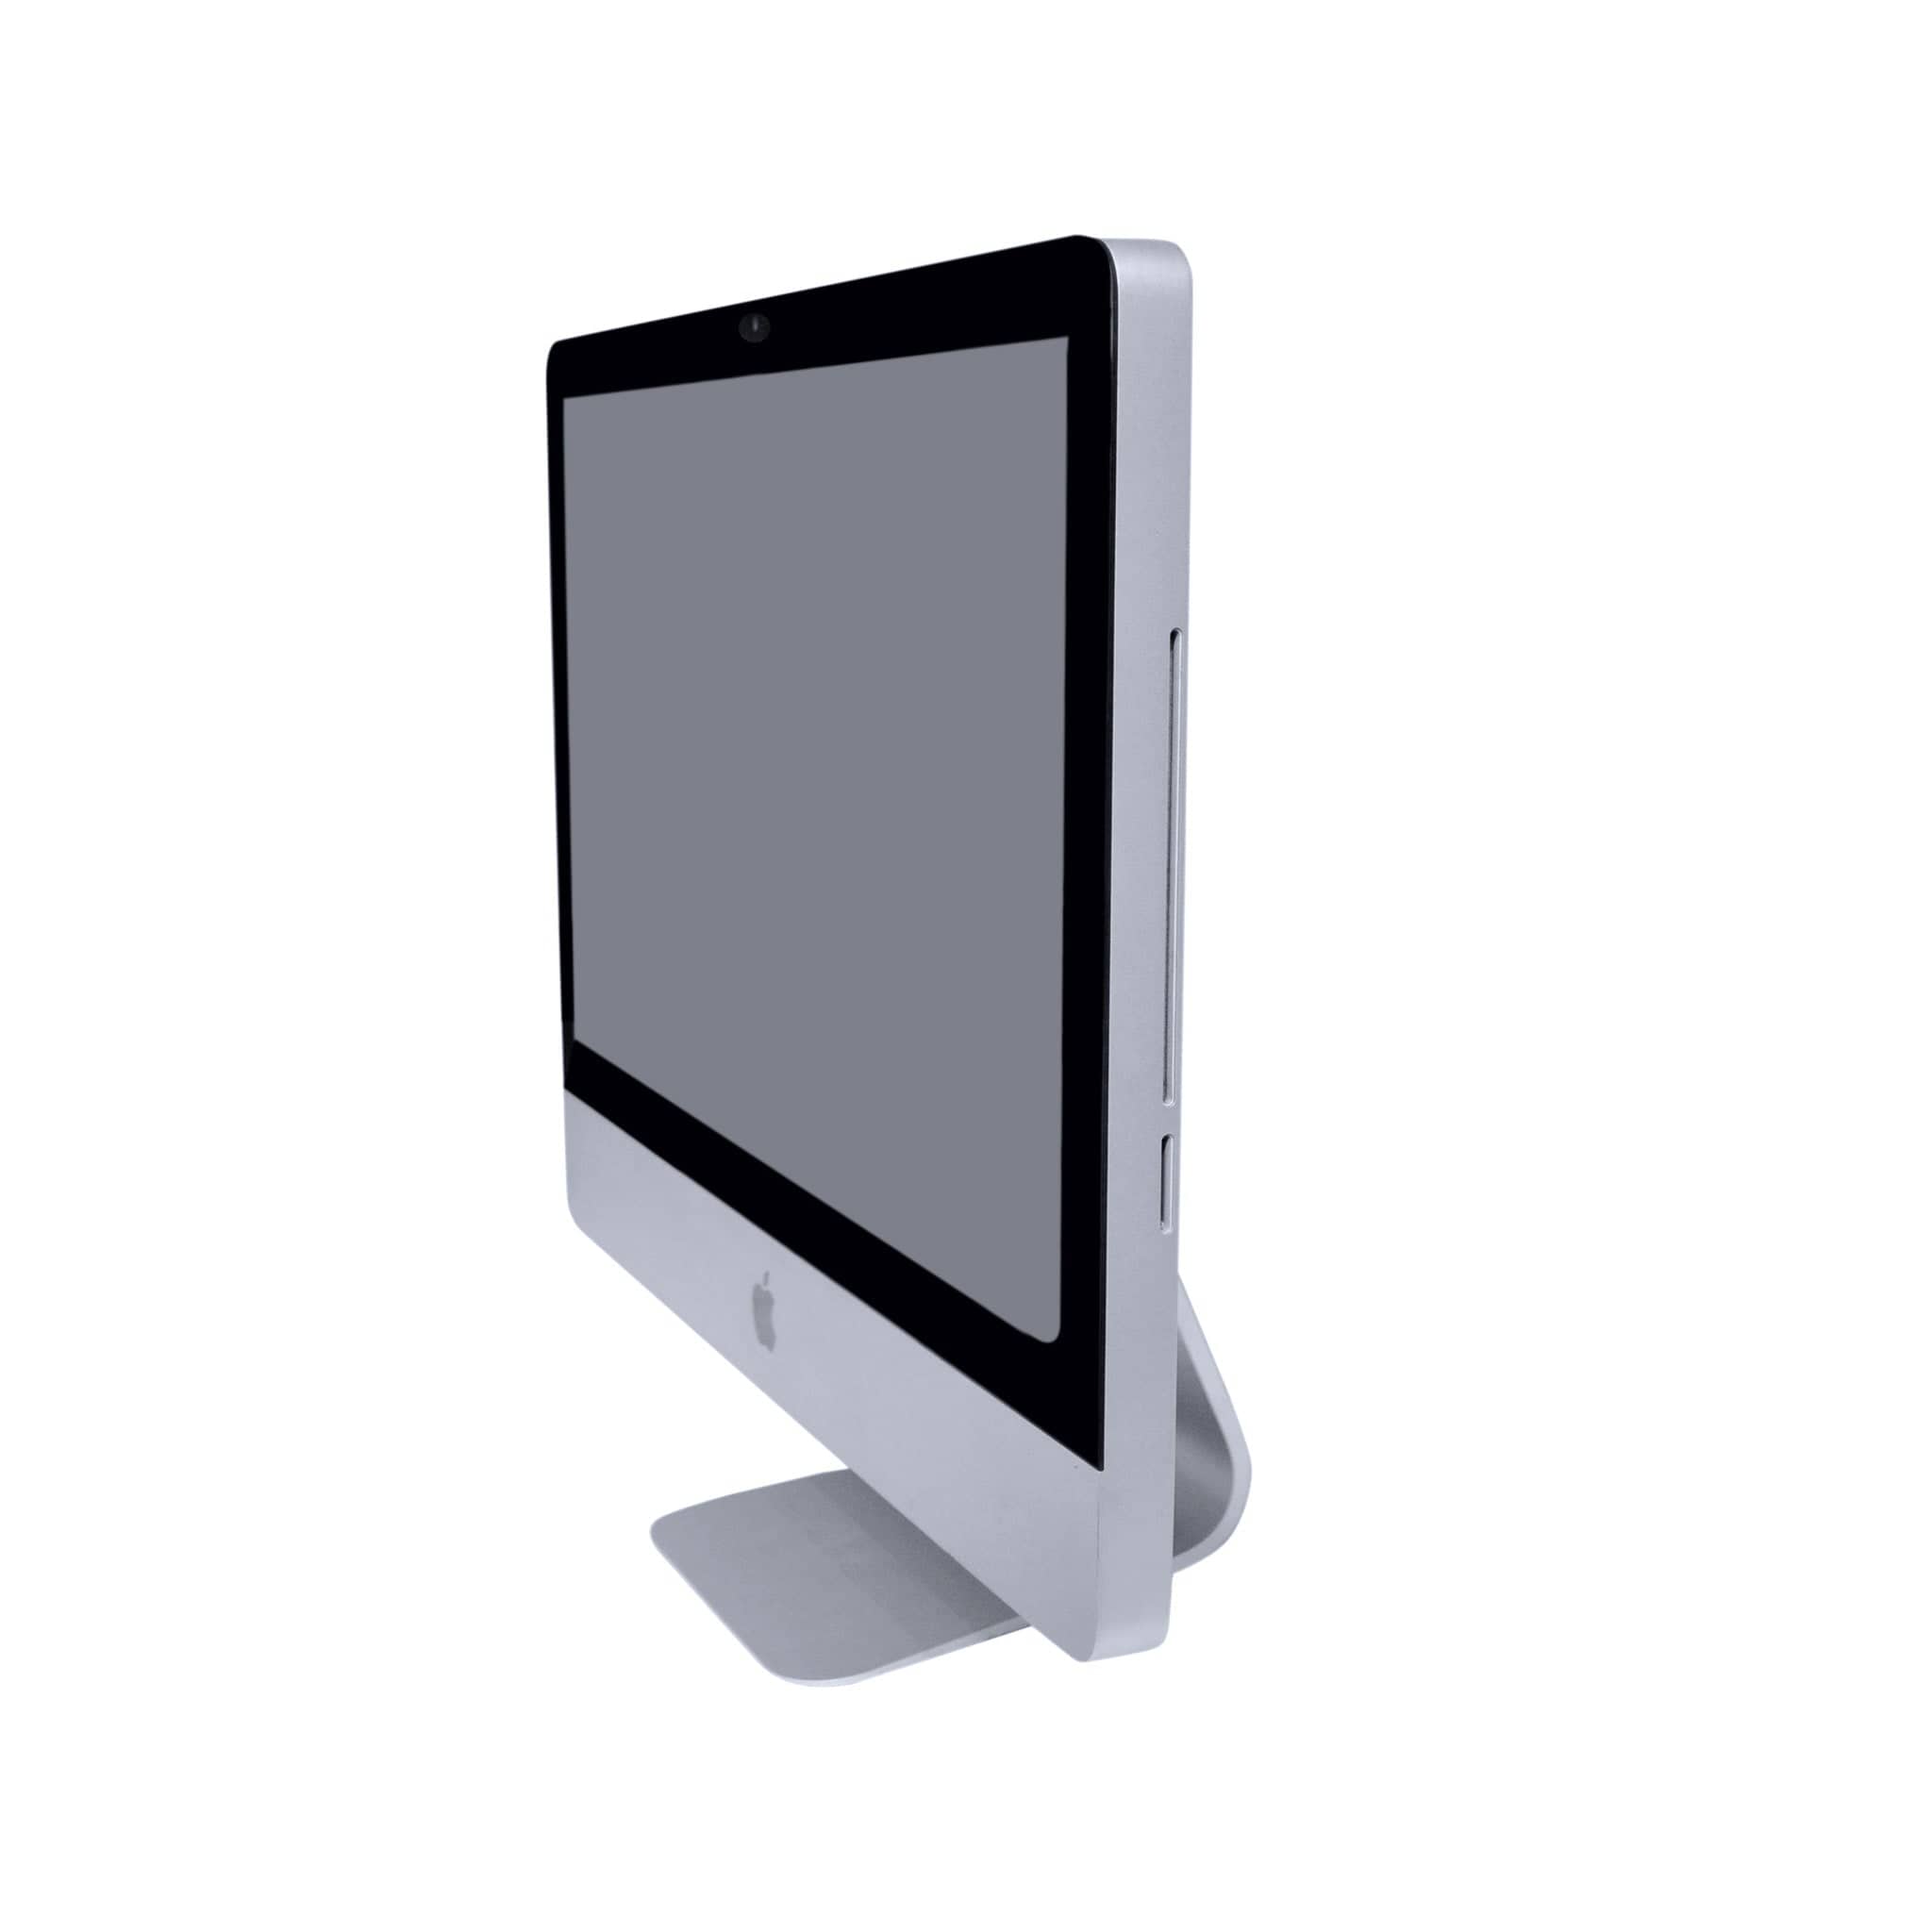 Apple iMac 21.5-inch i5 2.5GHz Quad-Core | Nofeka Uganda